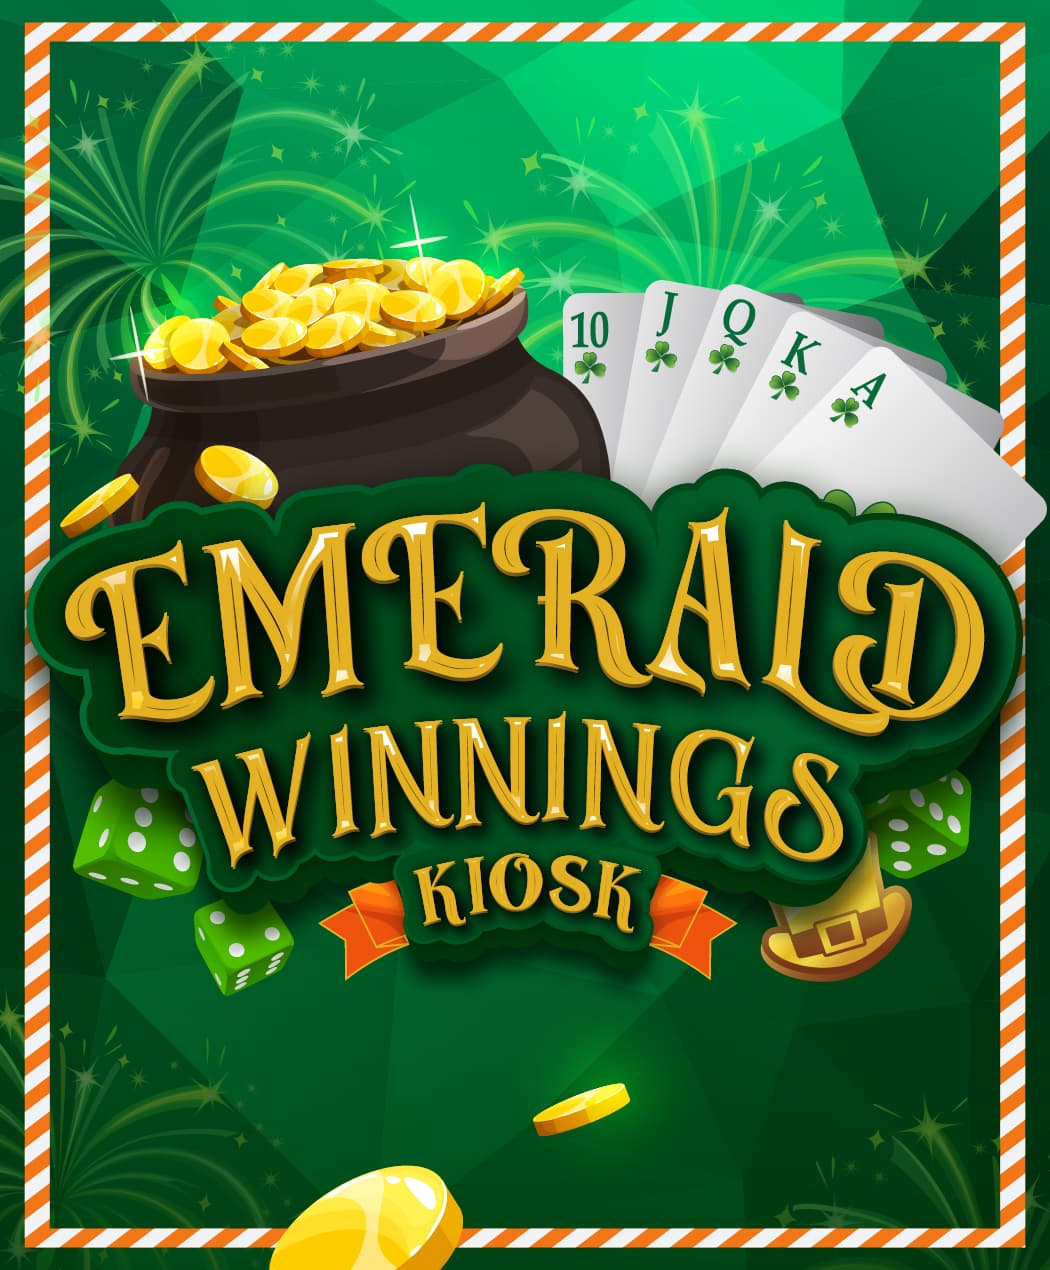 Emerald Winnings Kiosk